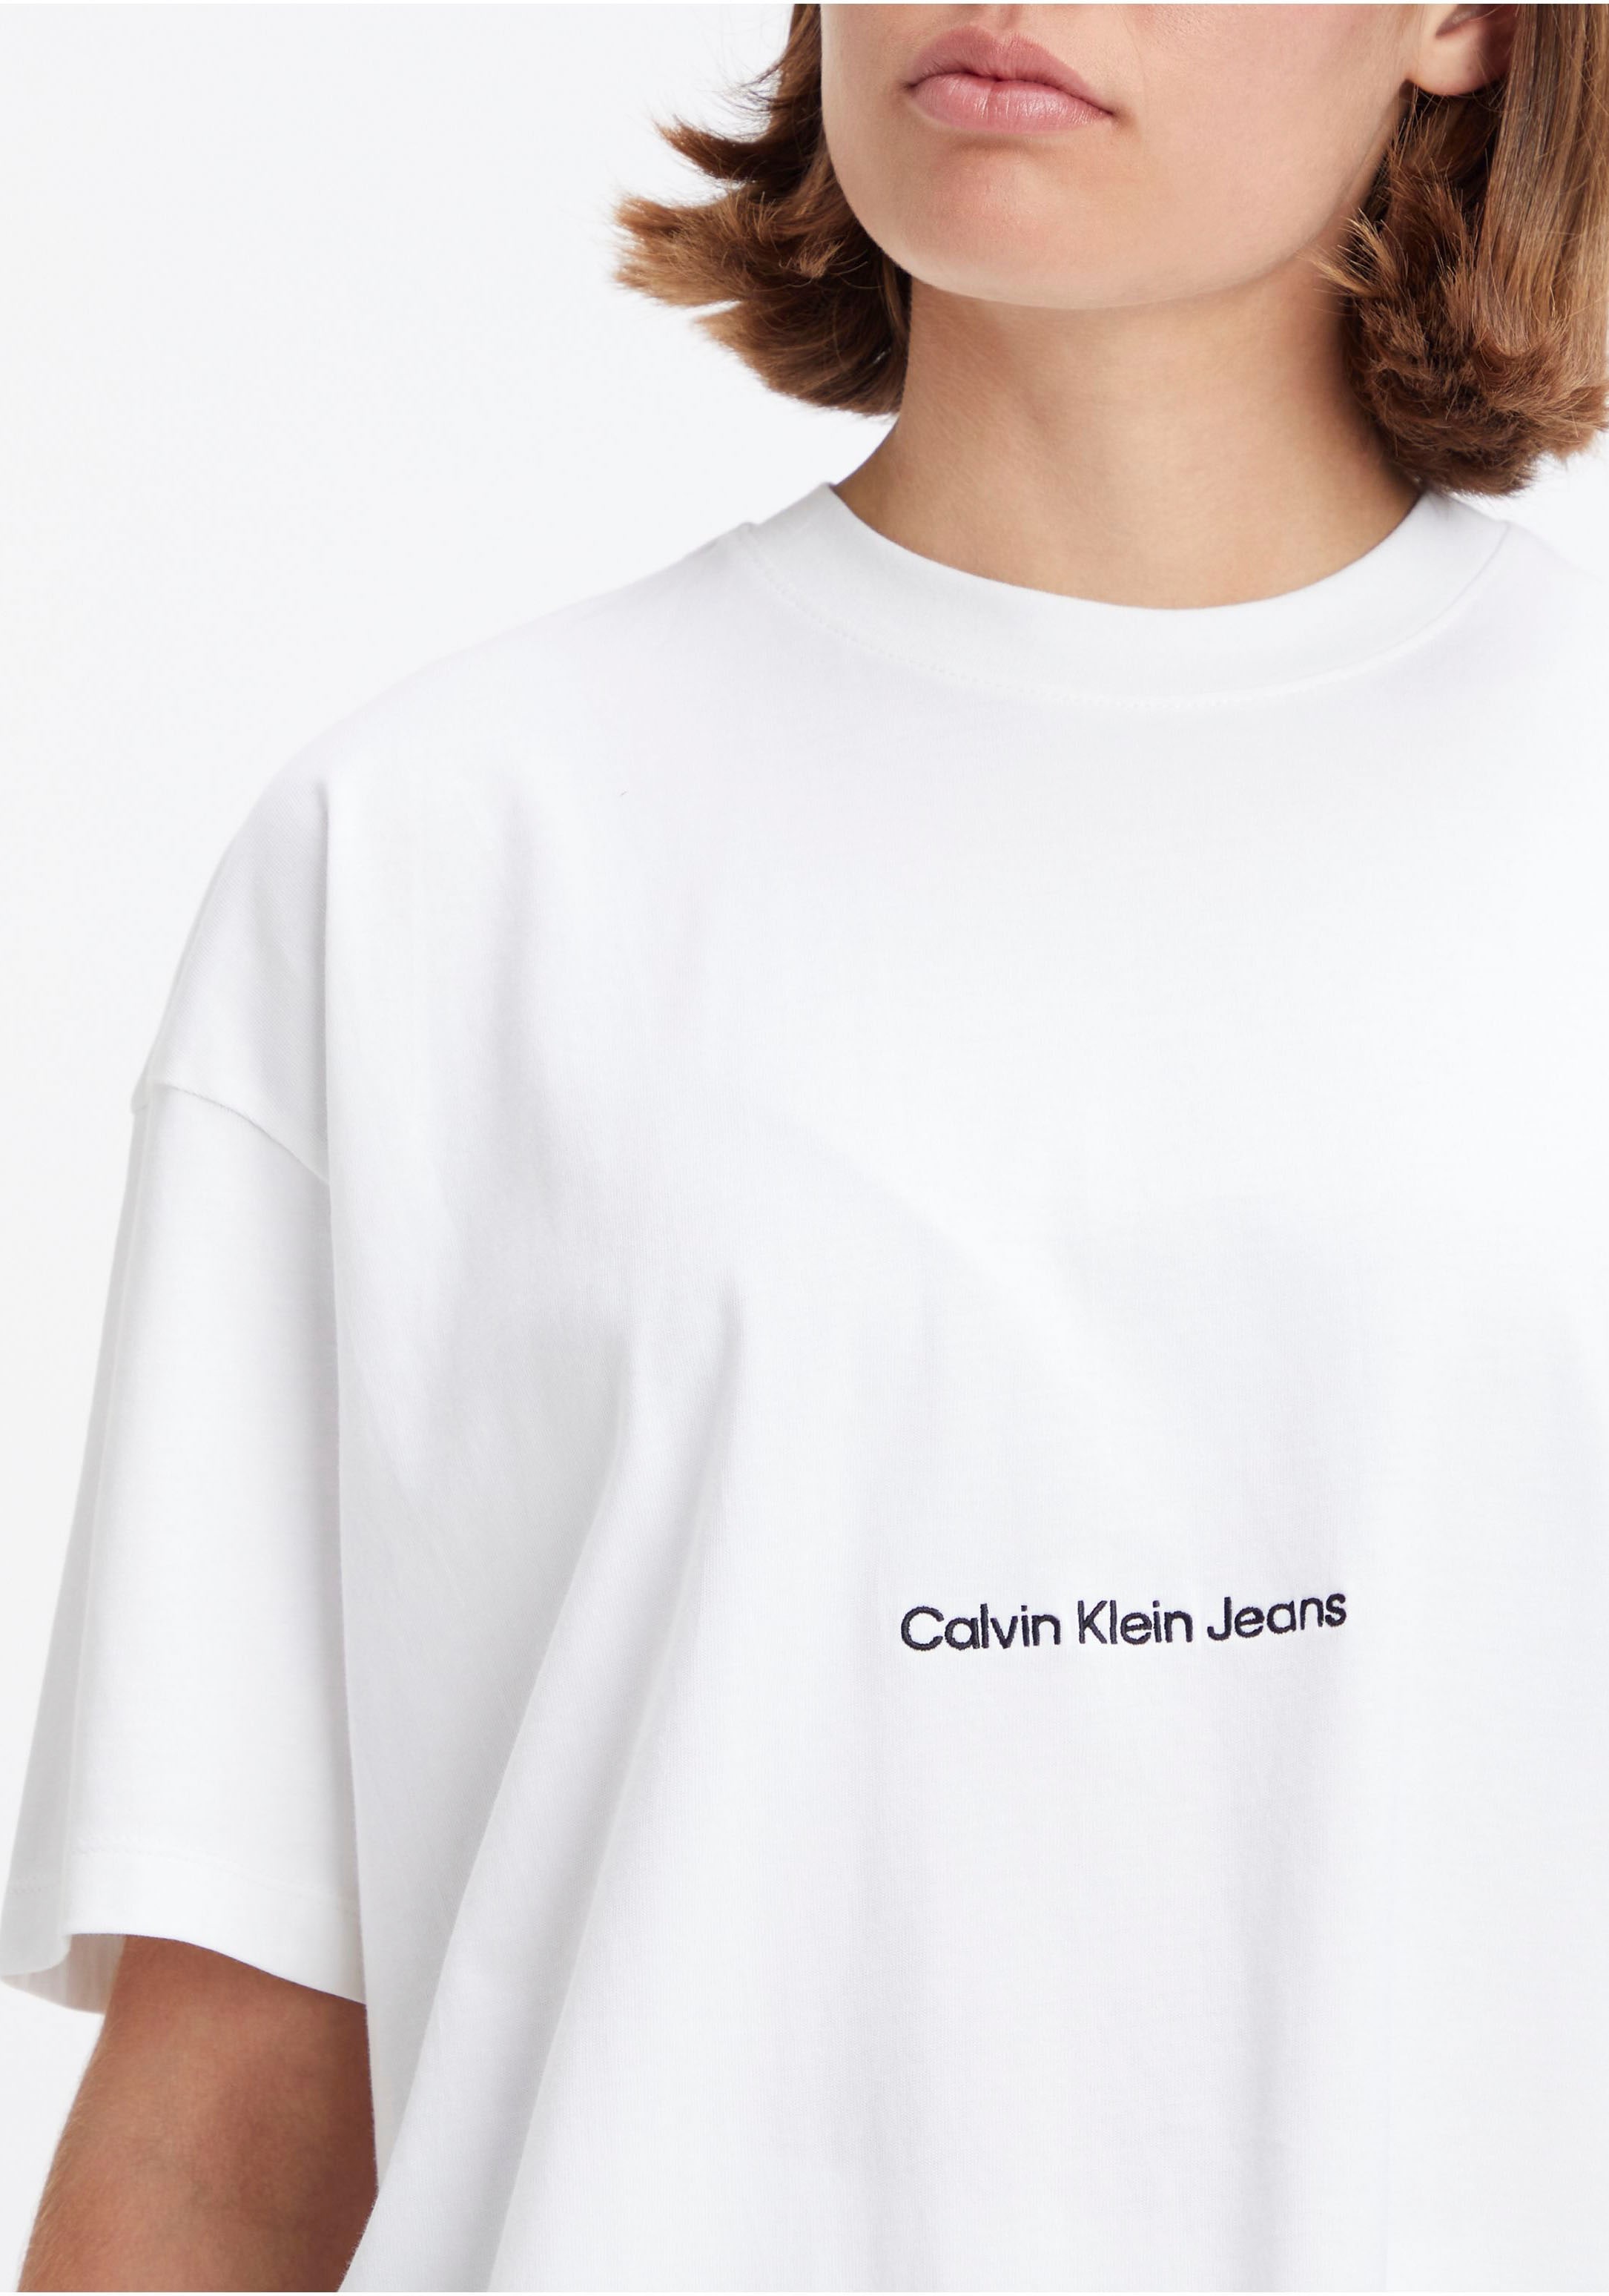 Calvin Klein Jeans in Oversized-Passform T-Shirt, bestellen